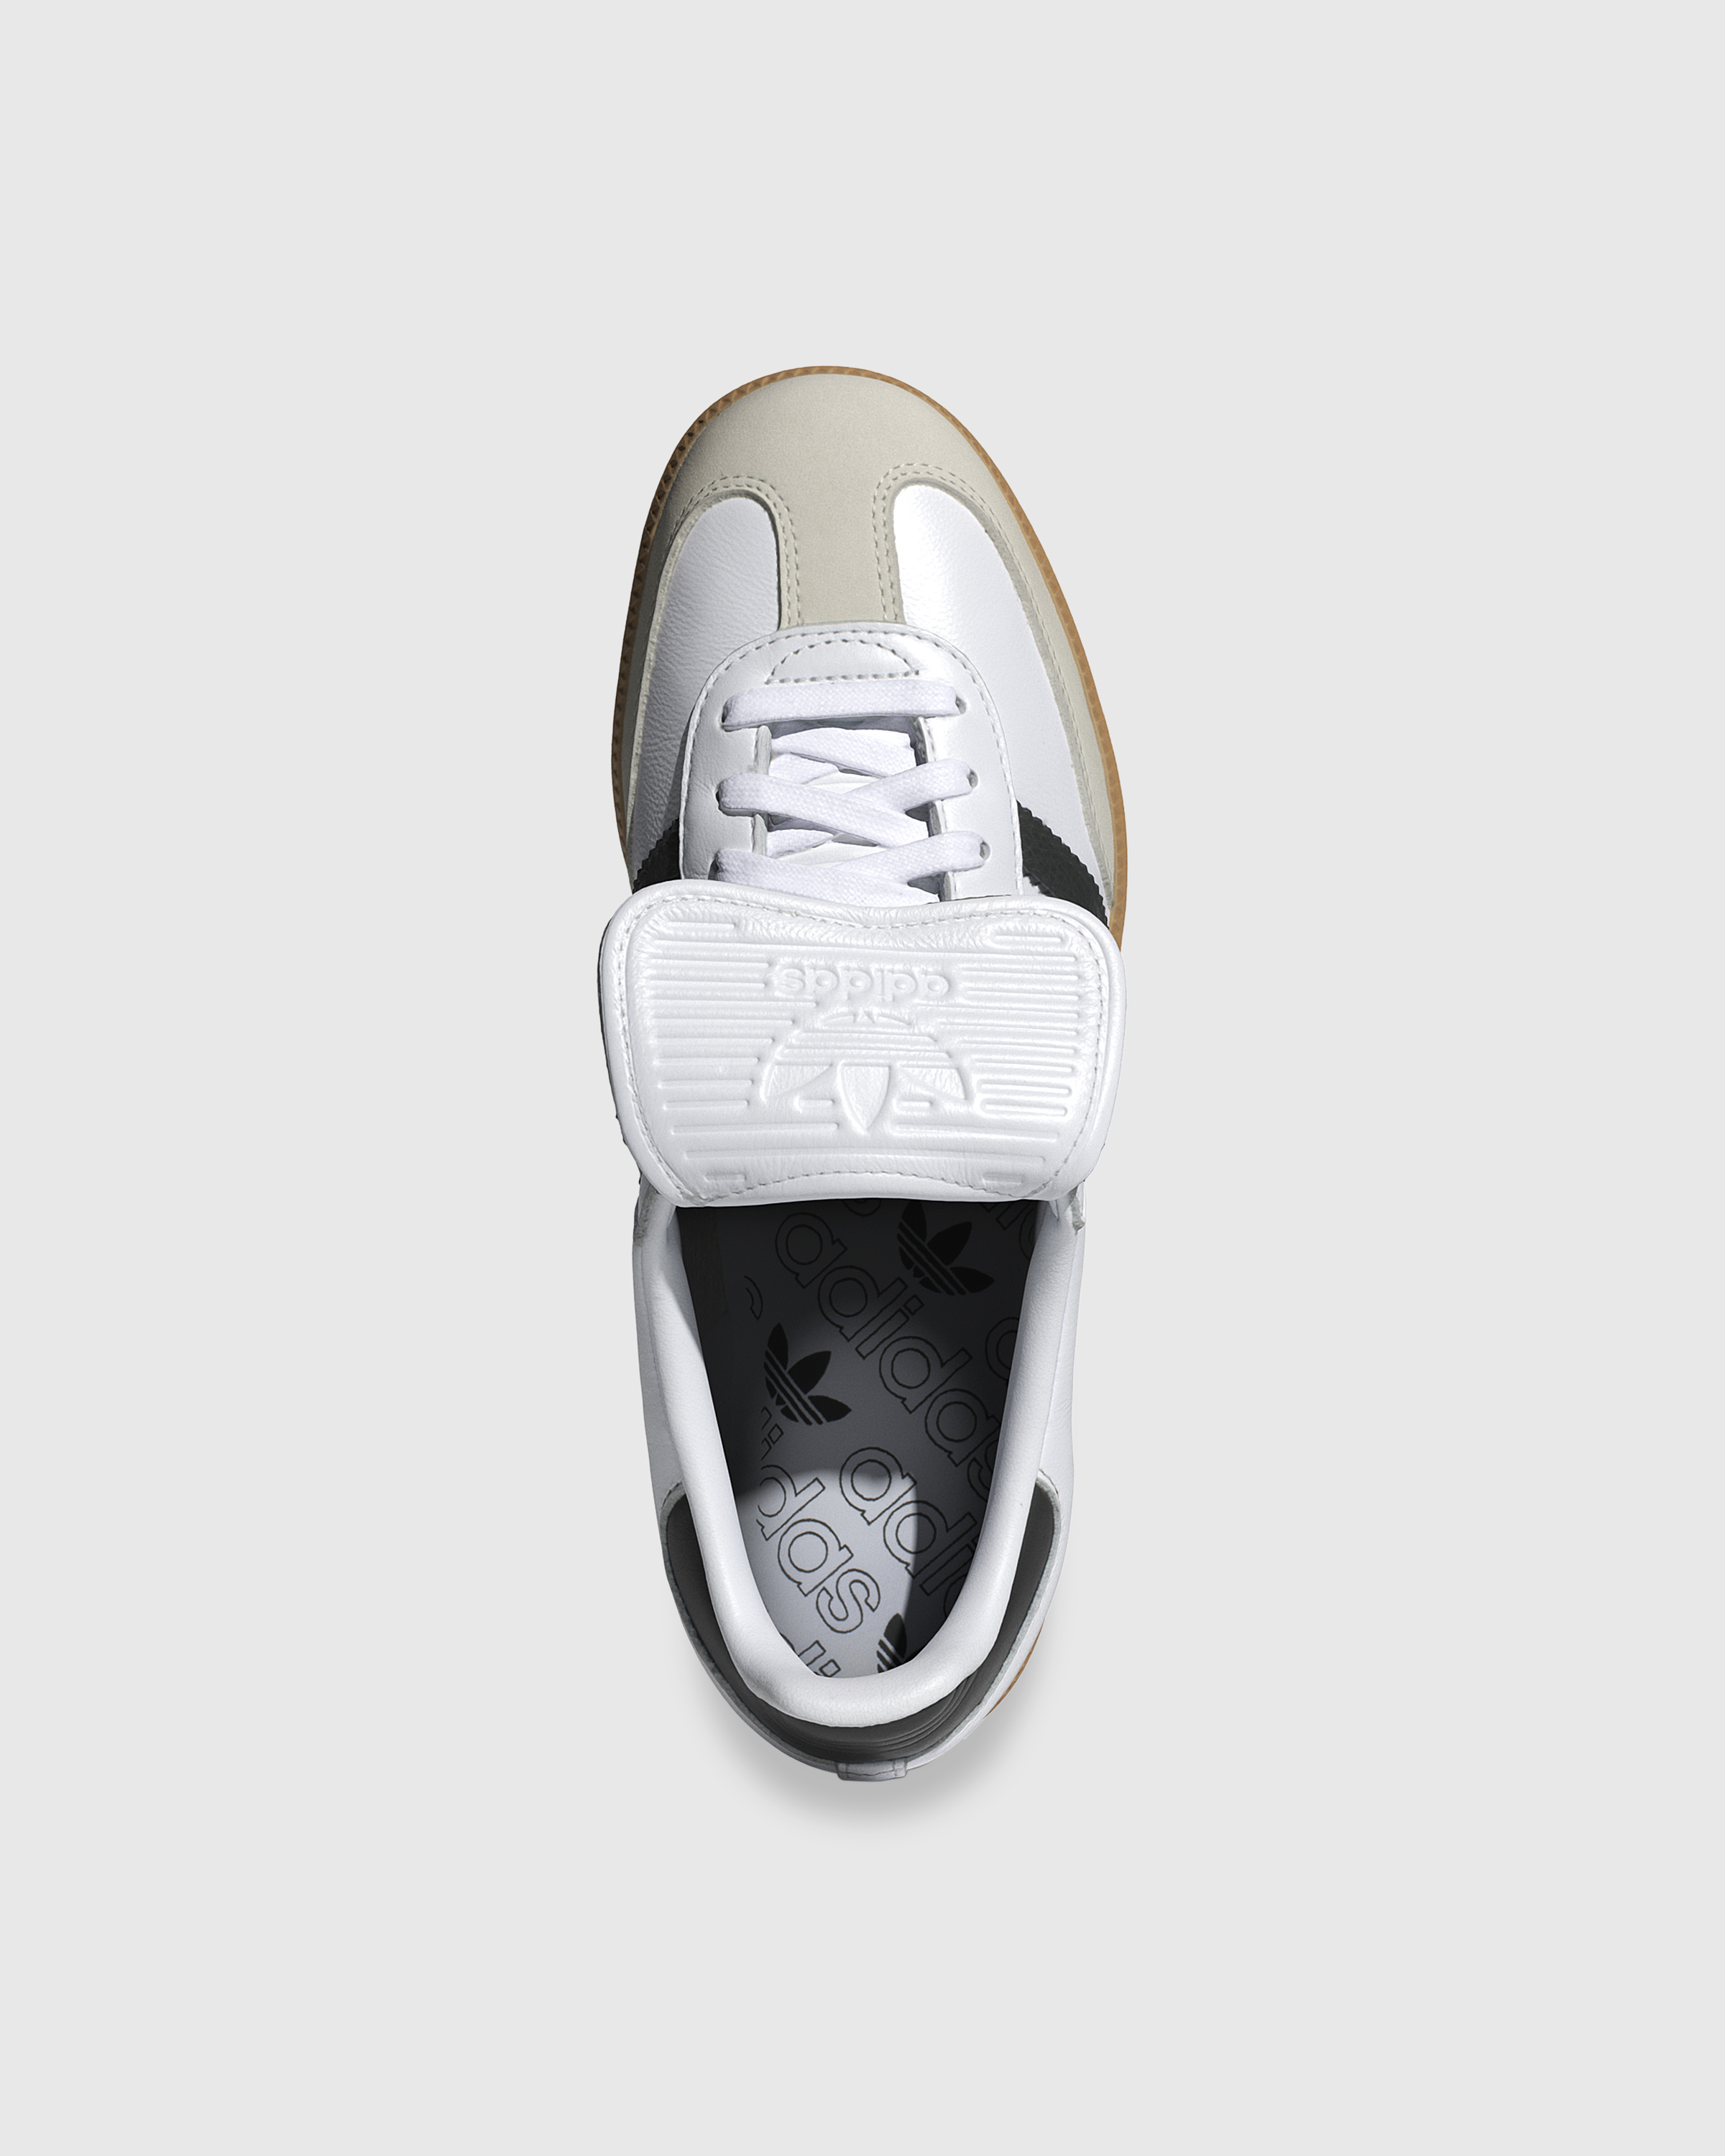 Adidas – Samba LT W White/Black/Gold - Low Top Sneakers - White - Image 5